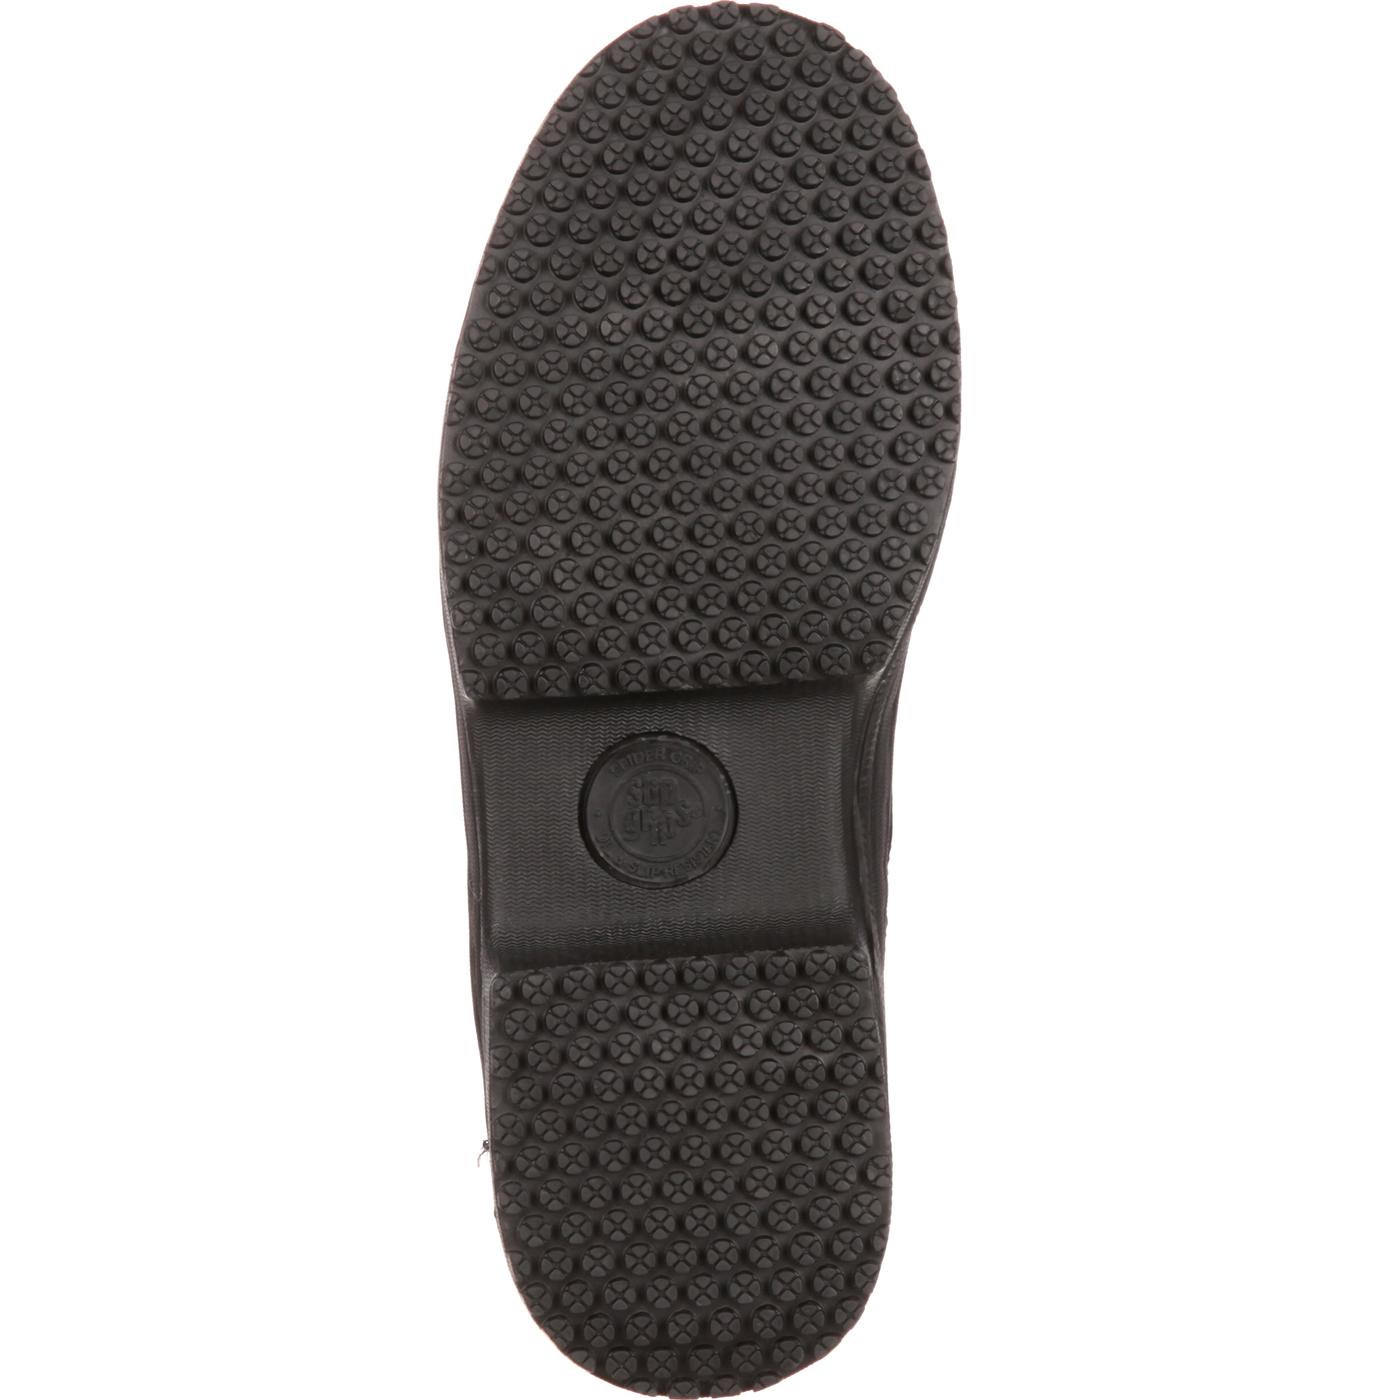 SlipGrips Steel Toe Slip-Resistant Oxfords, #5332